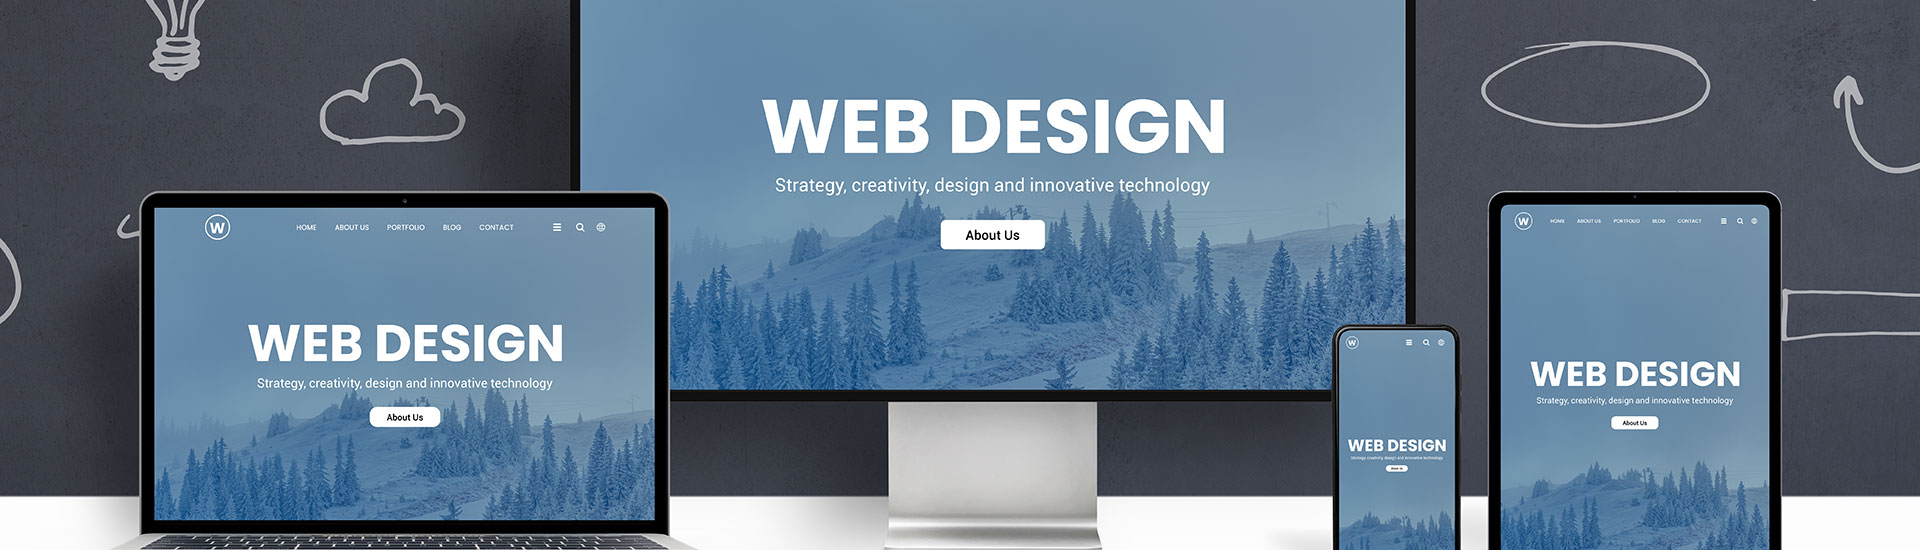 Baltimore Web Design - Responsive Website Design Solutions Baltimore, MD